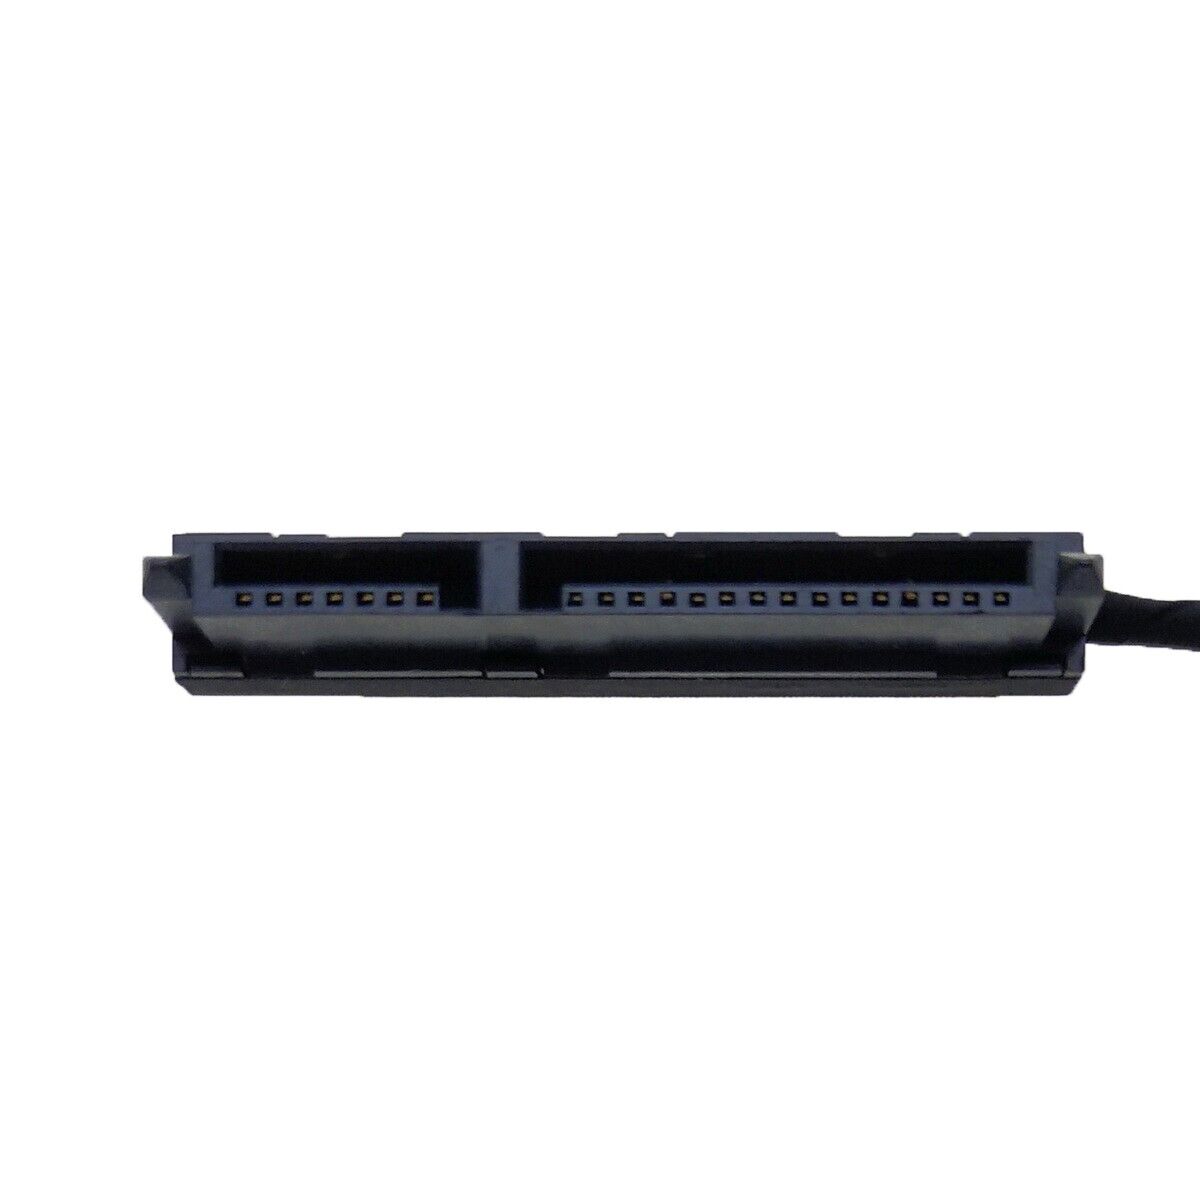 Dell New Hard Drive HDD SSD SATA IO Connector Cable Inspiron 15 7000 7570 7573 7580 P70F 0R93Y2 450.0CL03.0001 R93Y2